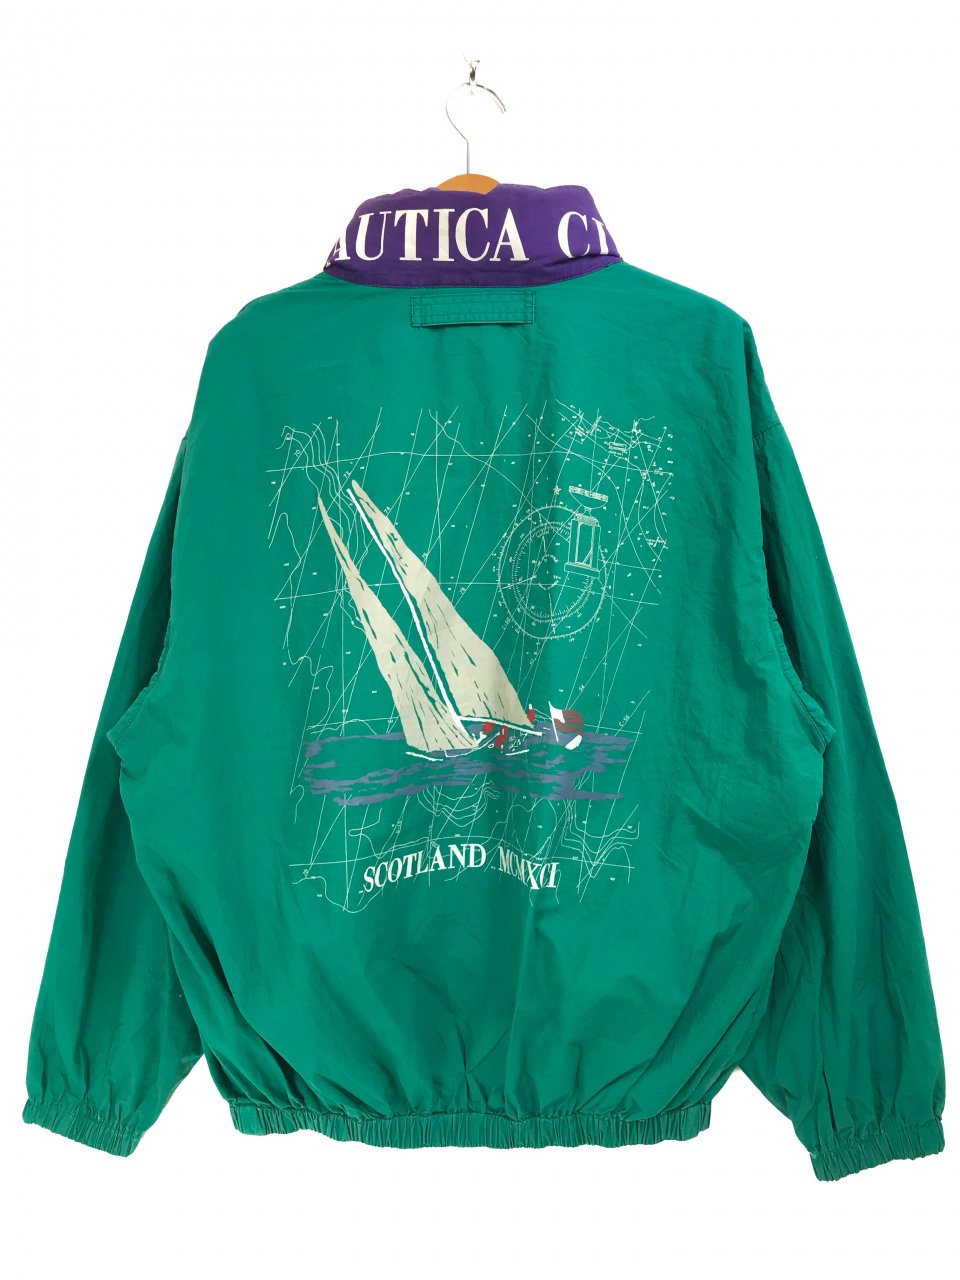 90s NAUTICA "NAUTICA CUP" Back Print Cotton Sailing Jacket 緑紫 L ノーティカ